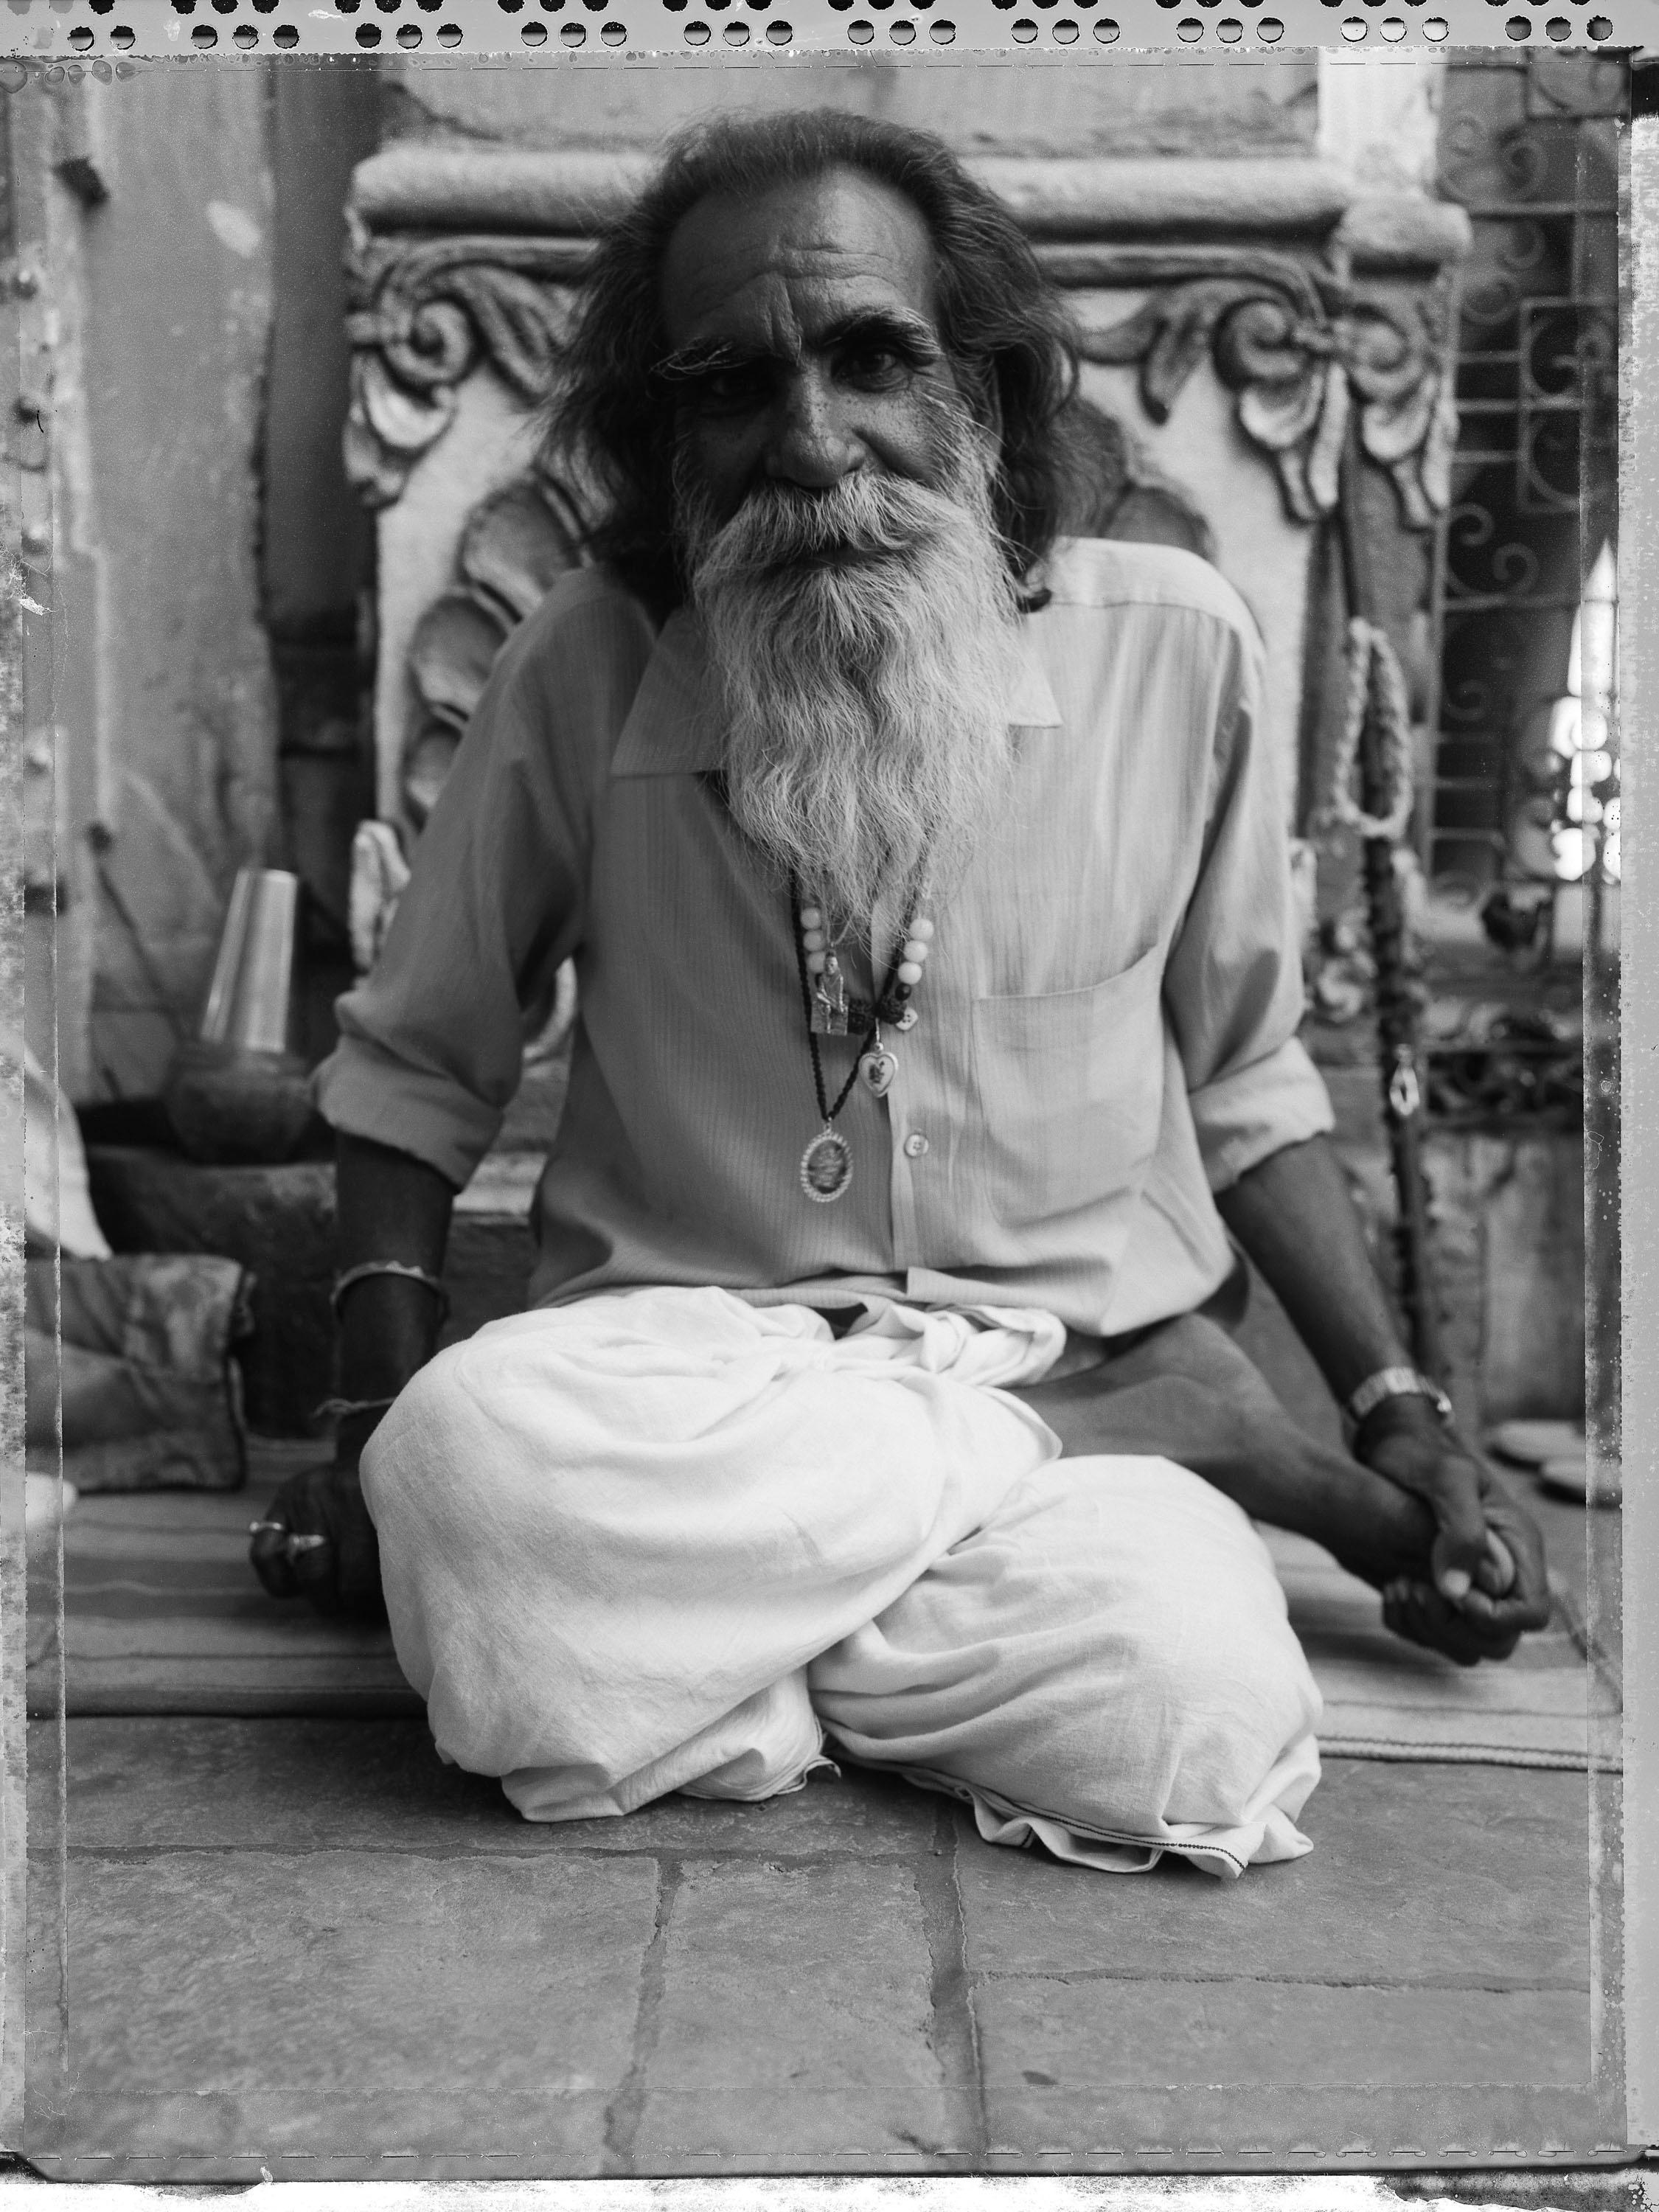 Carlo Bevilacqua Portrait Photograph - Sadhu - Rajastan -India (from Indian Stills series )